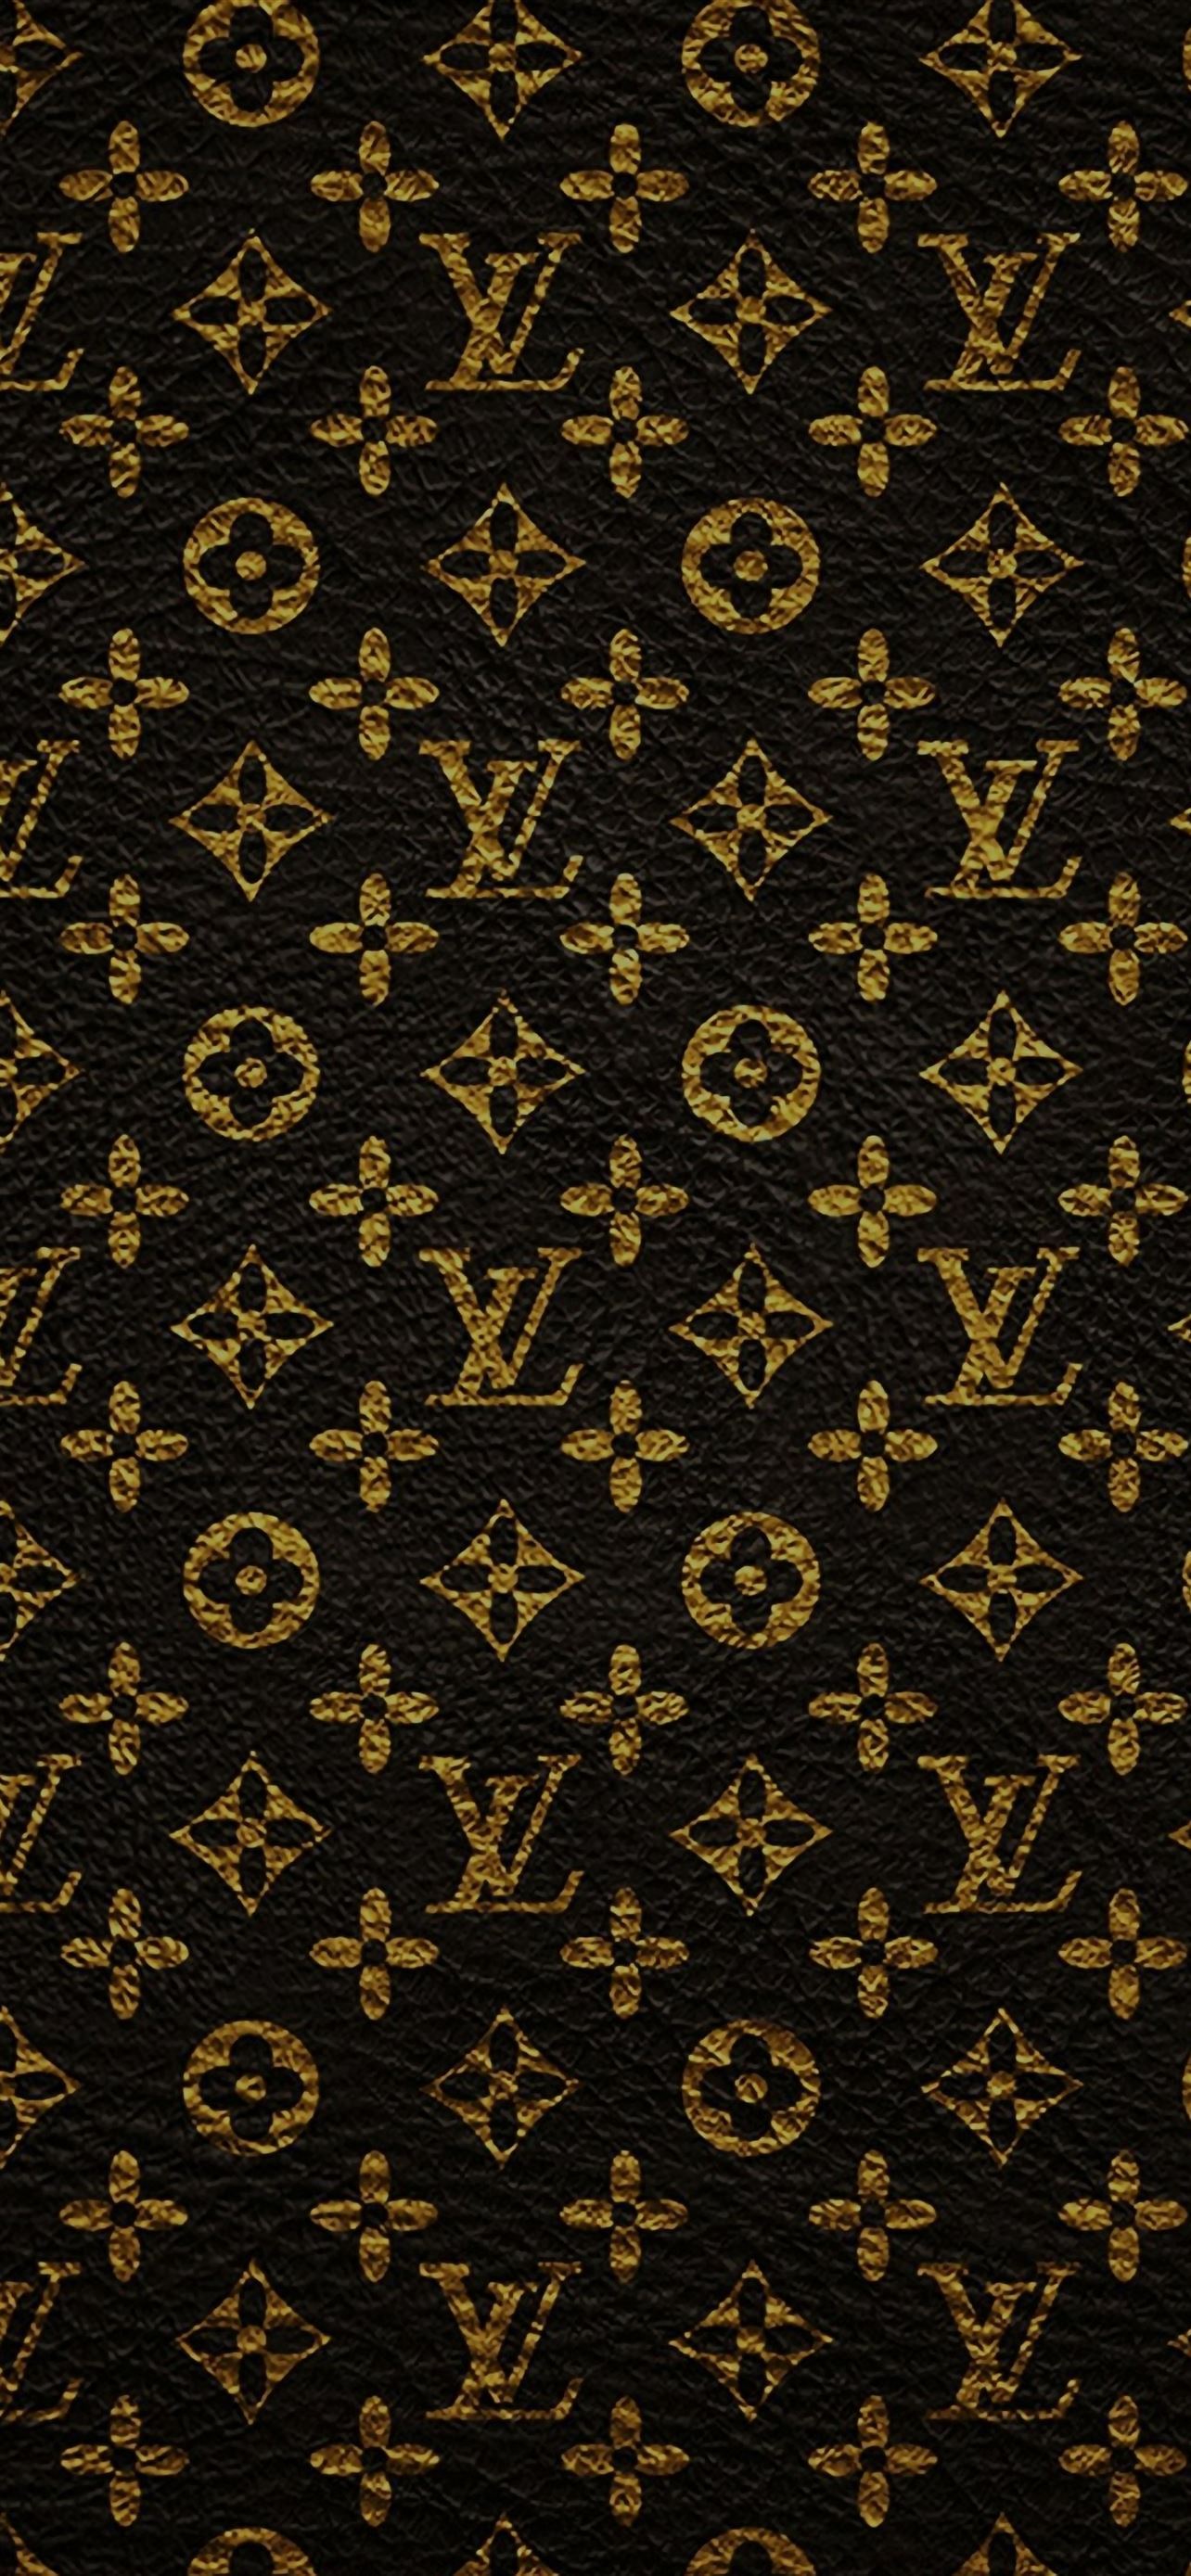 Louis Vuitton Dark Pattern Art iPhone se Wallpaper Download | iPhone